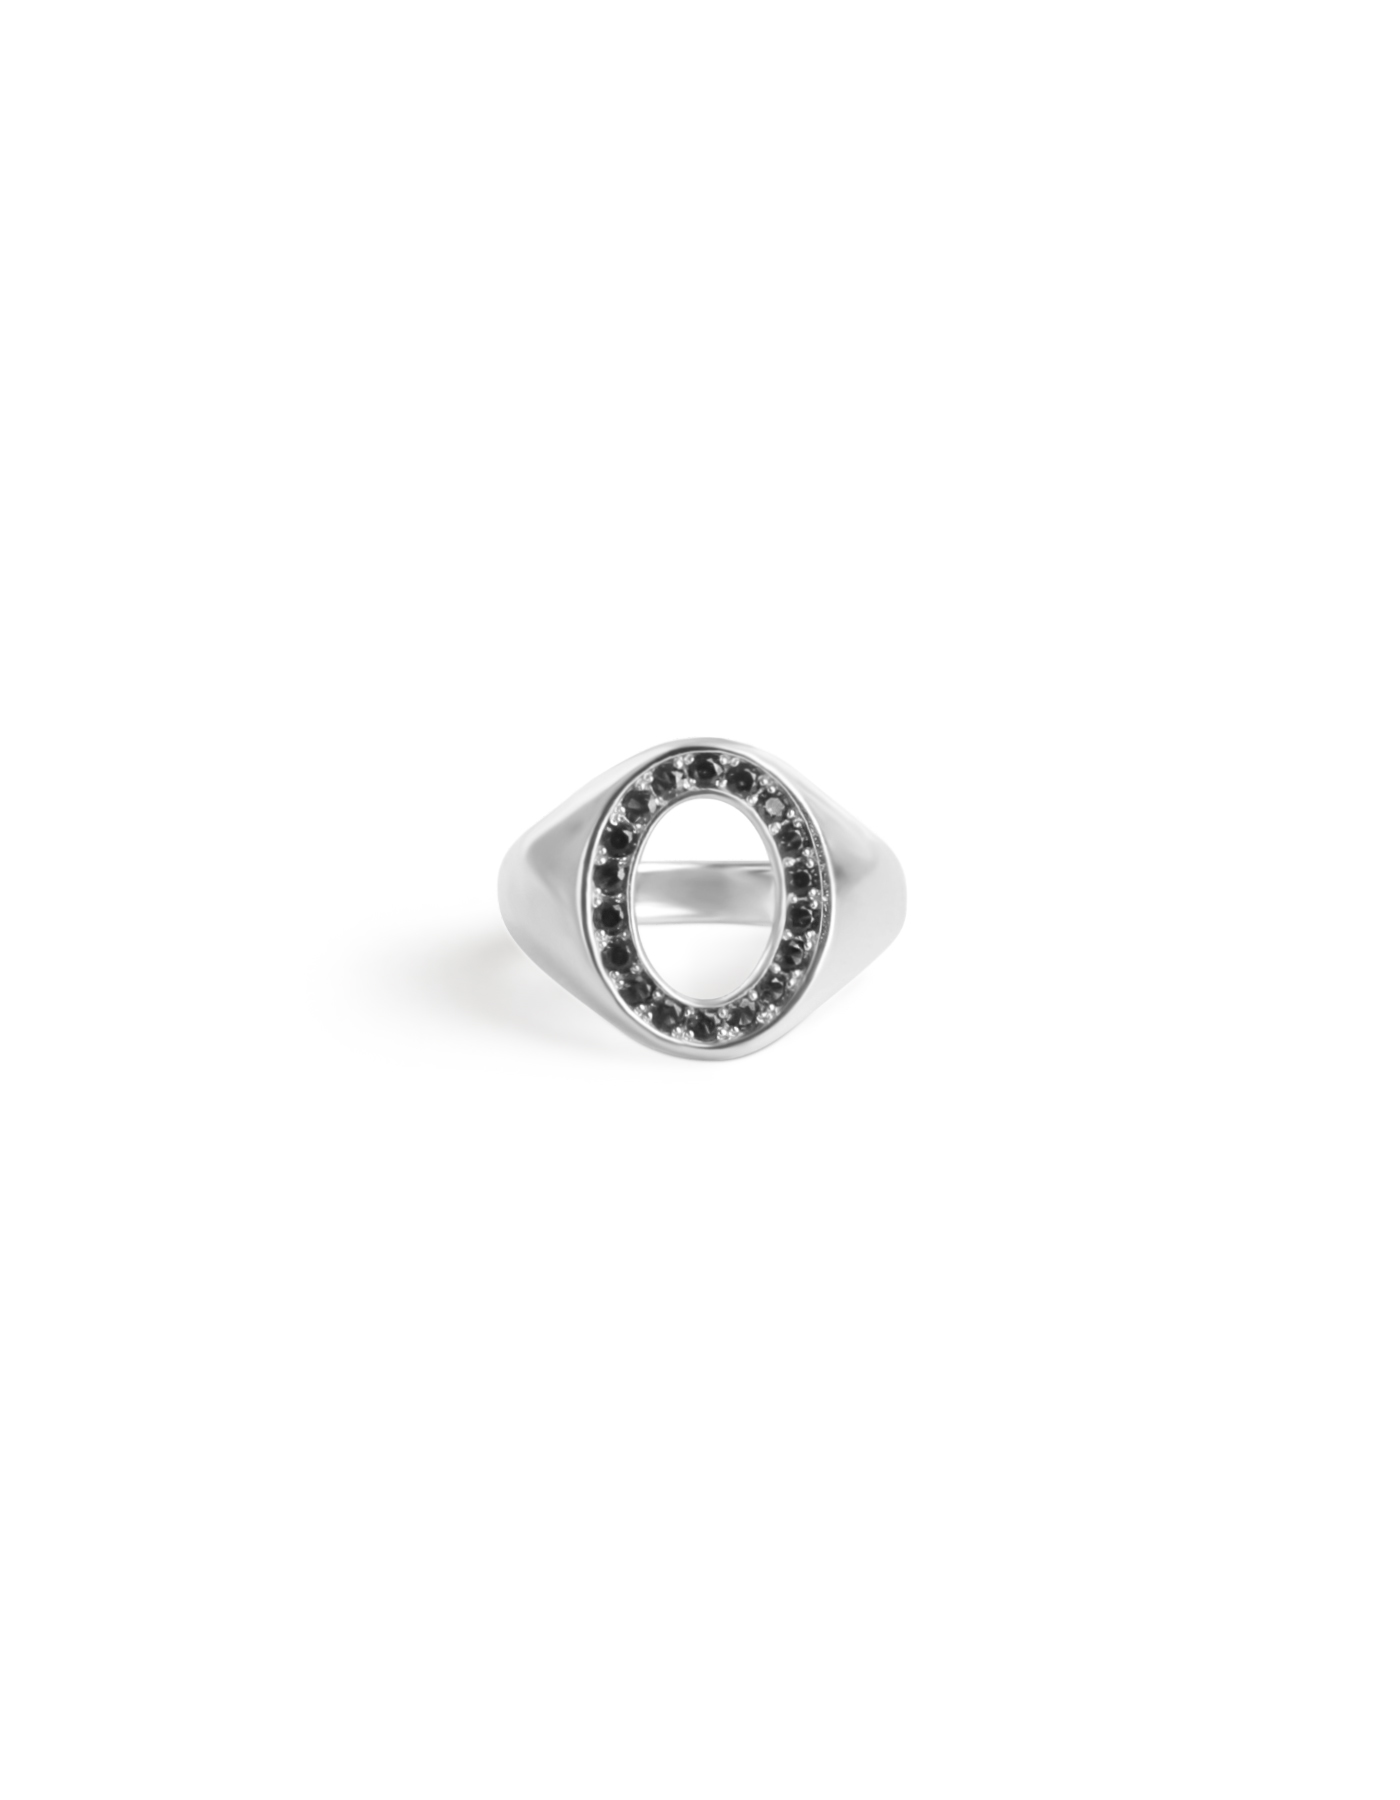 LY Ring (Black)